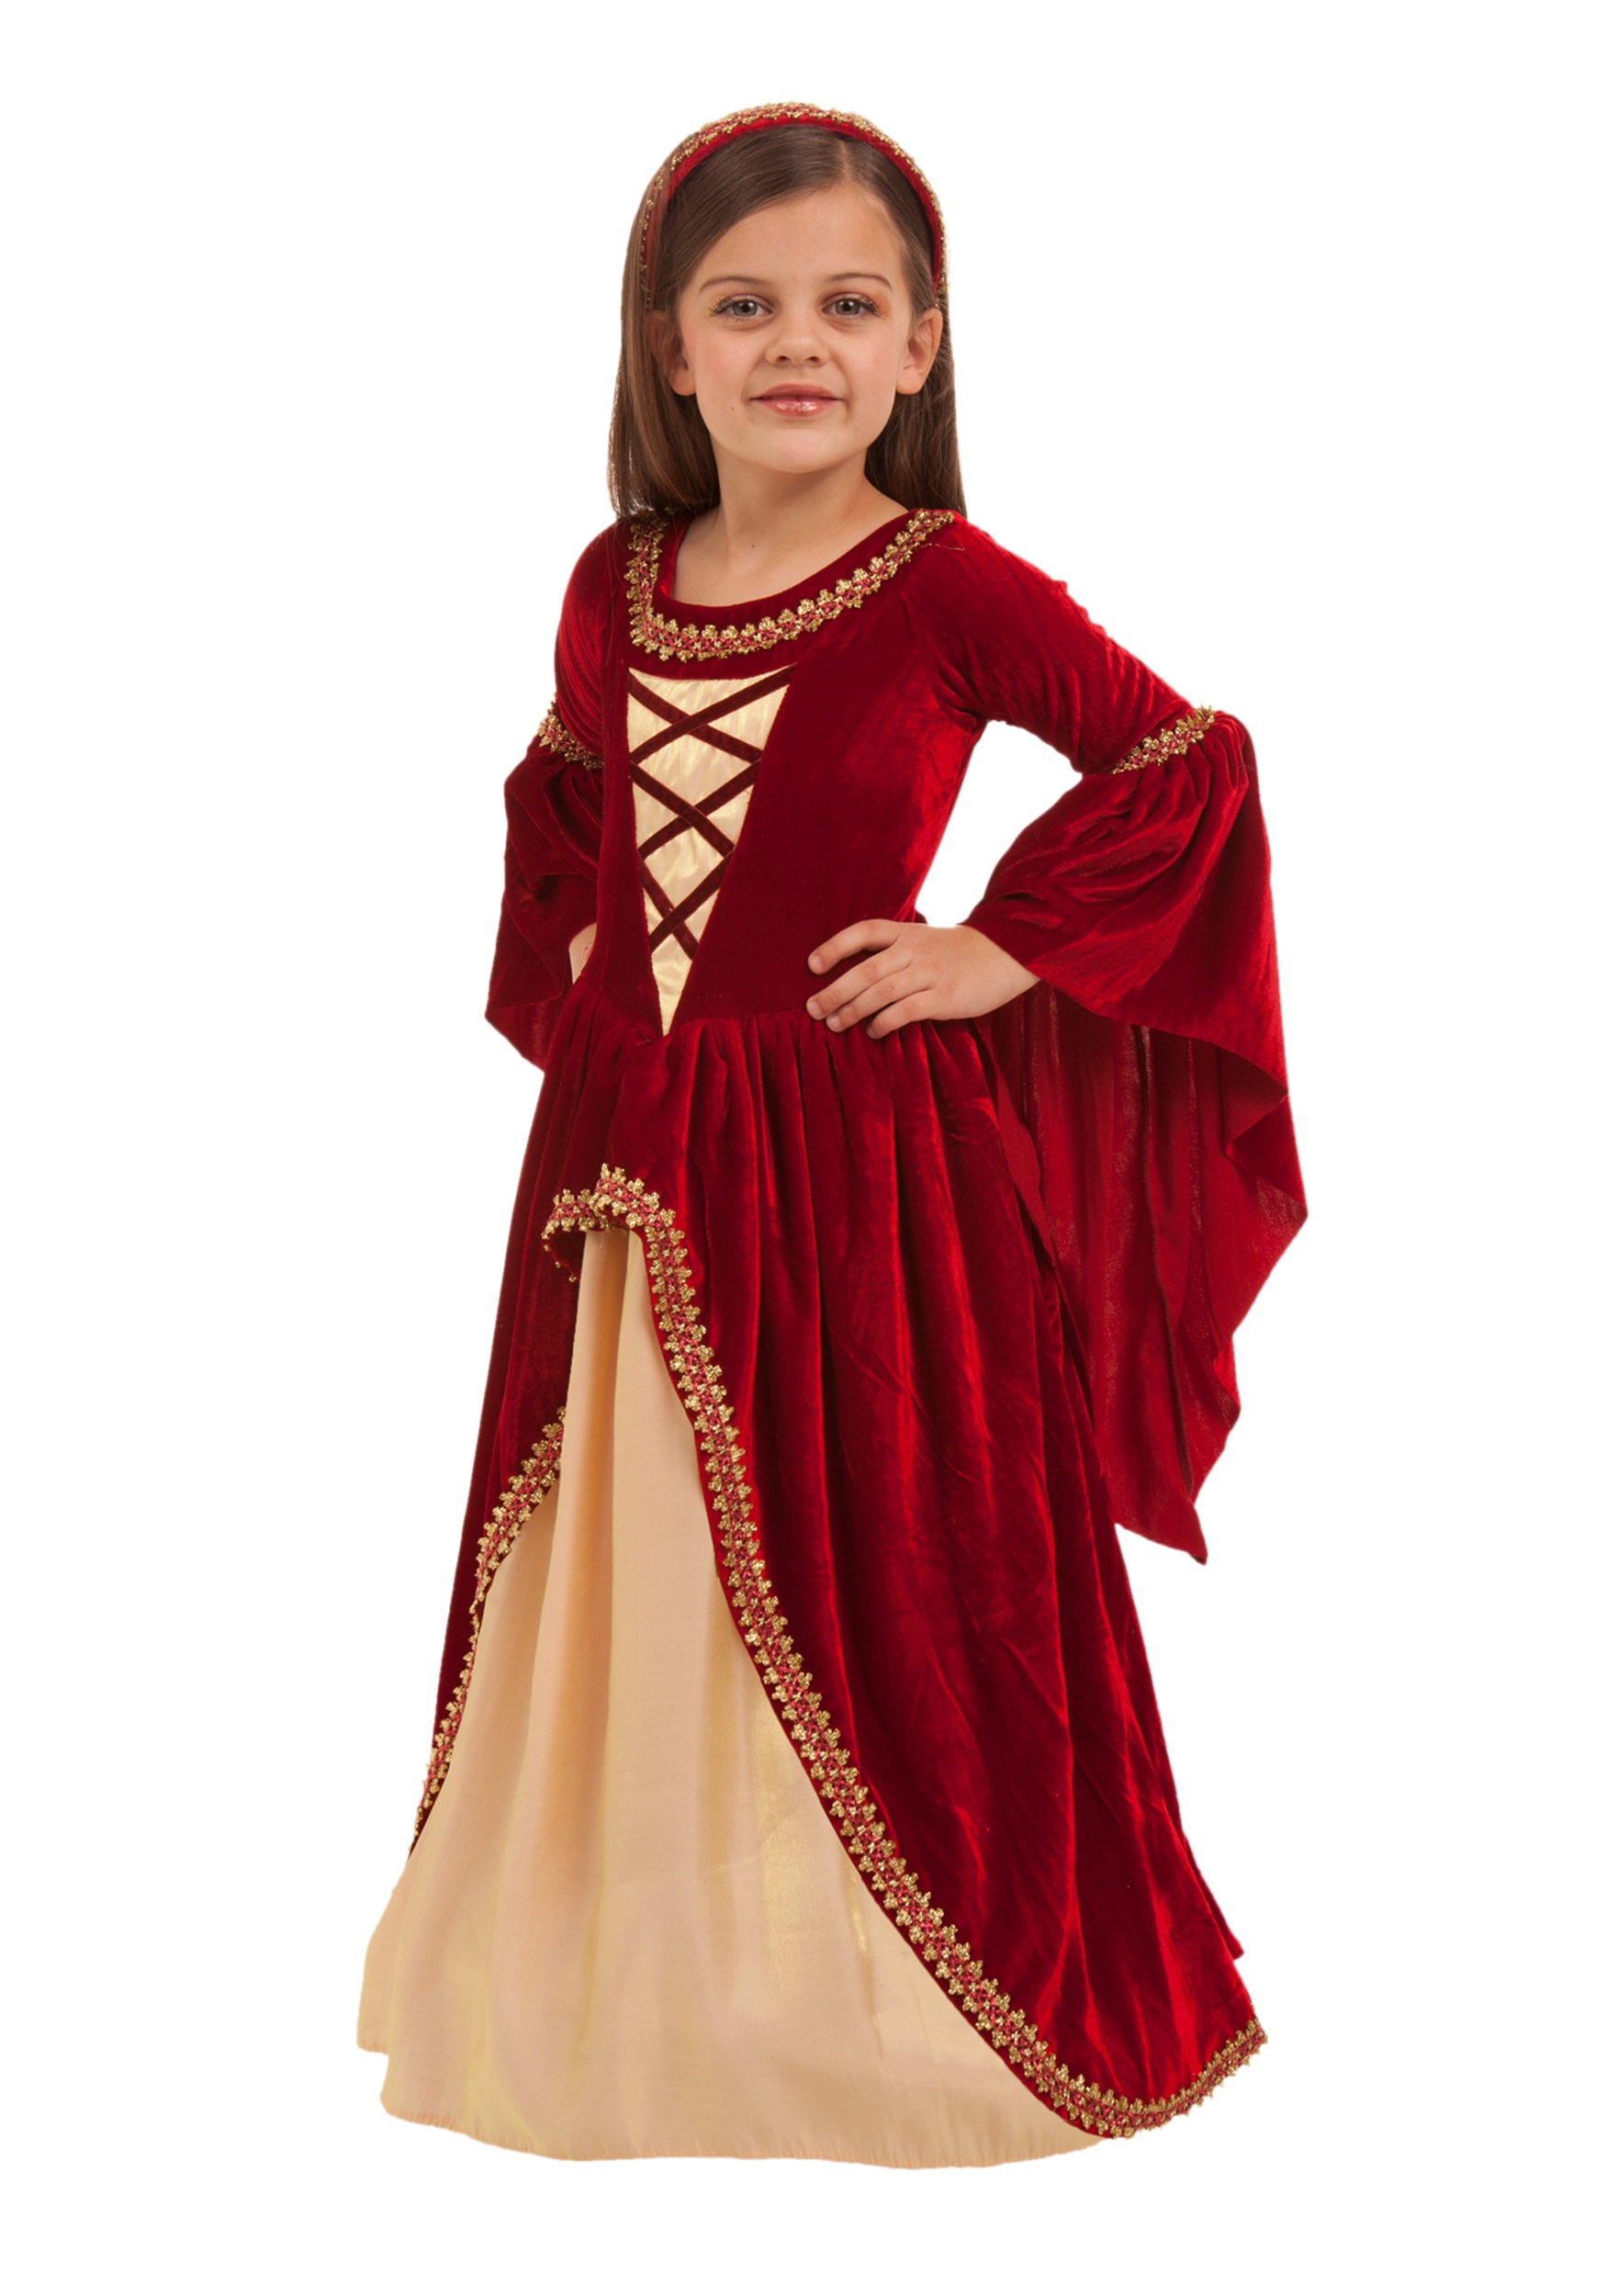 Alessandra the Crimson Princess Girls Costume